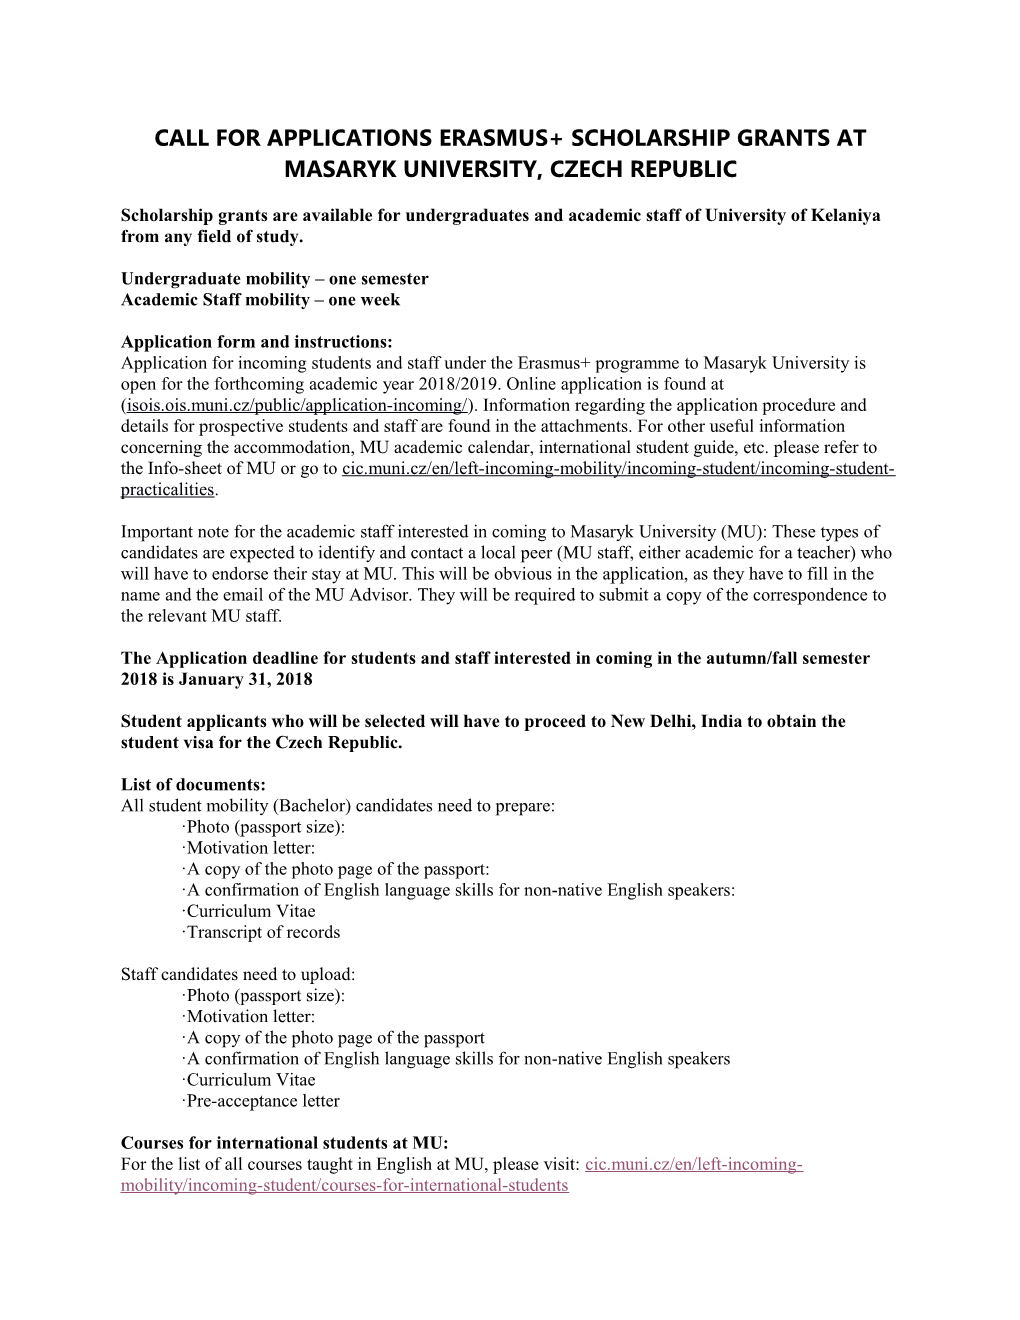 Call for Applications Erasmus+ Scholarship Grants at Masaryk University, Czech Republic